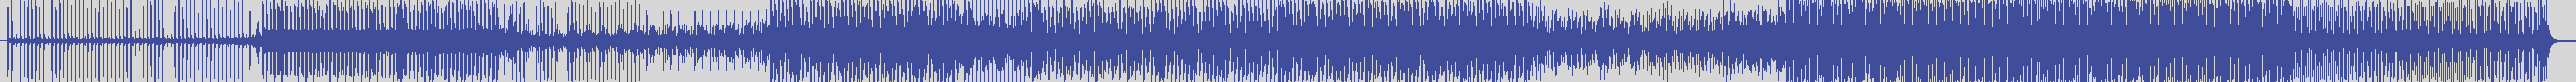 atomic_recordings [AR017] Daniel-m - Hands Up [Original Mix] audio wave form